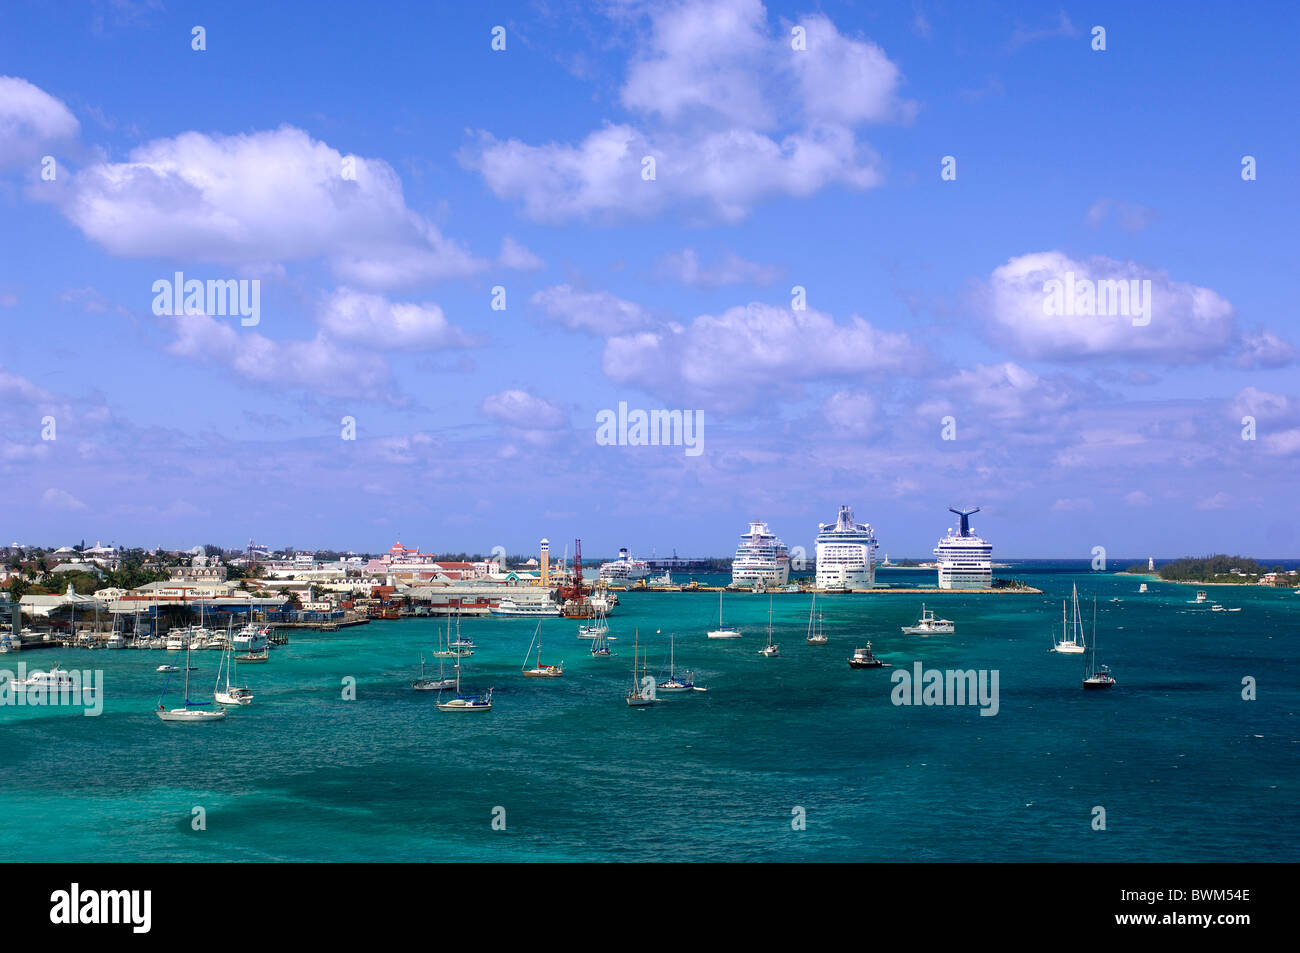 Nassau Bahamas Kreuzfahrt Schiffe Karibik Kreuzer Kreuzer Schiff Tourisms Reisen Urlaub Ferien Hafen harbo Stockfoto